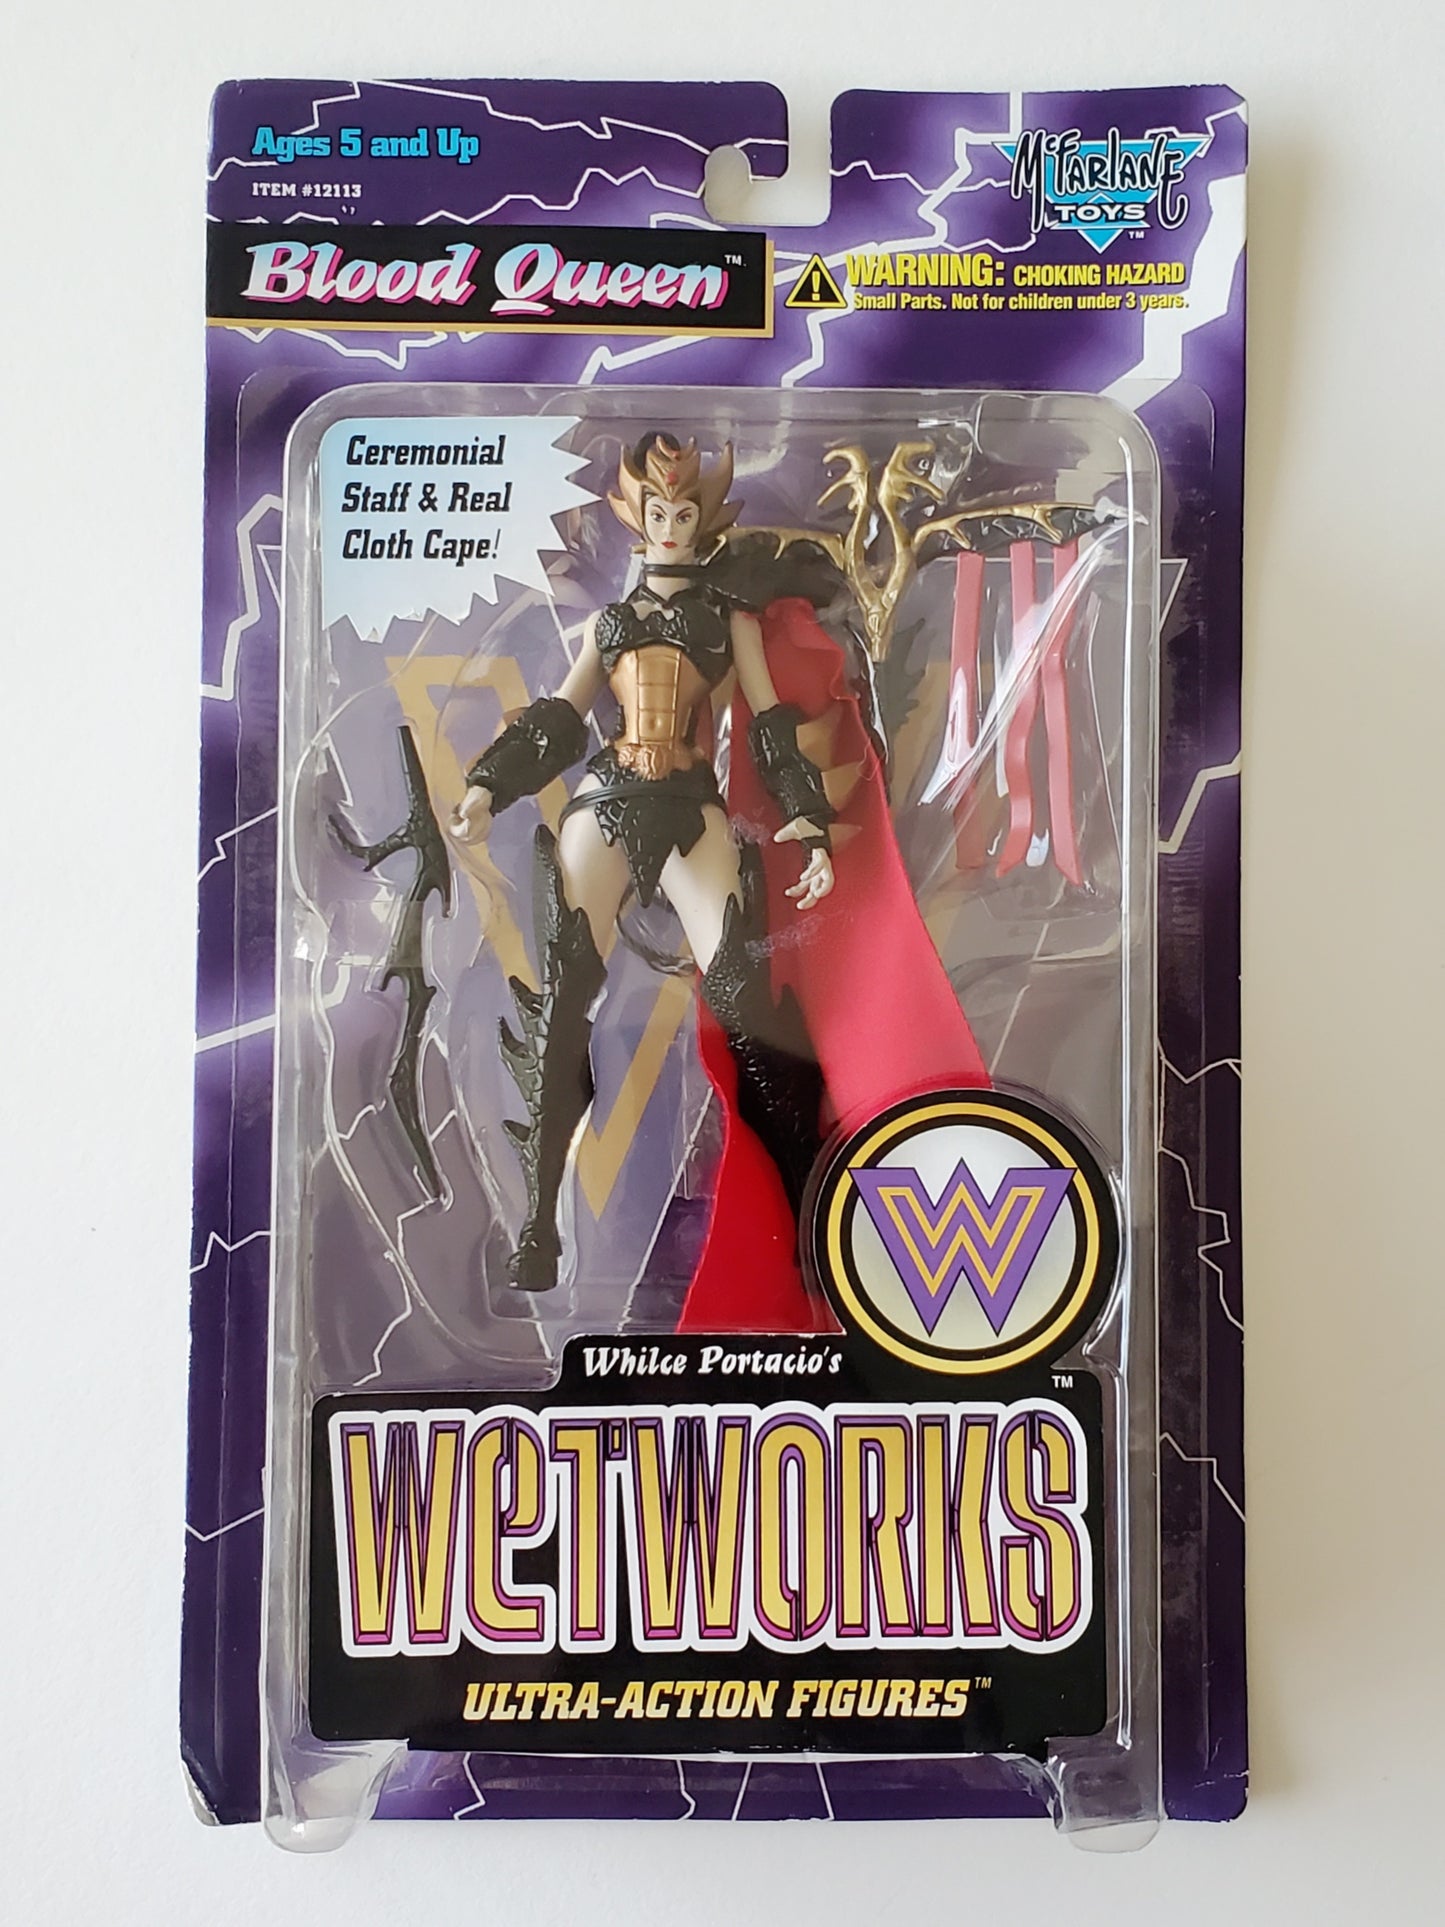 Wetworks Blood Queen (black costume)